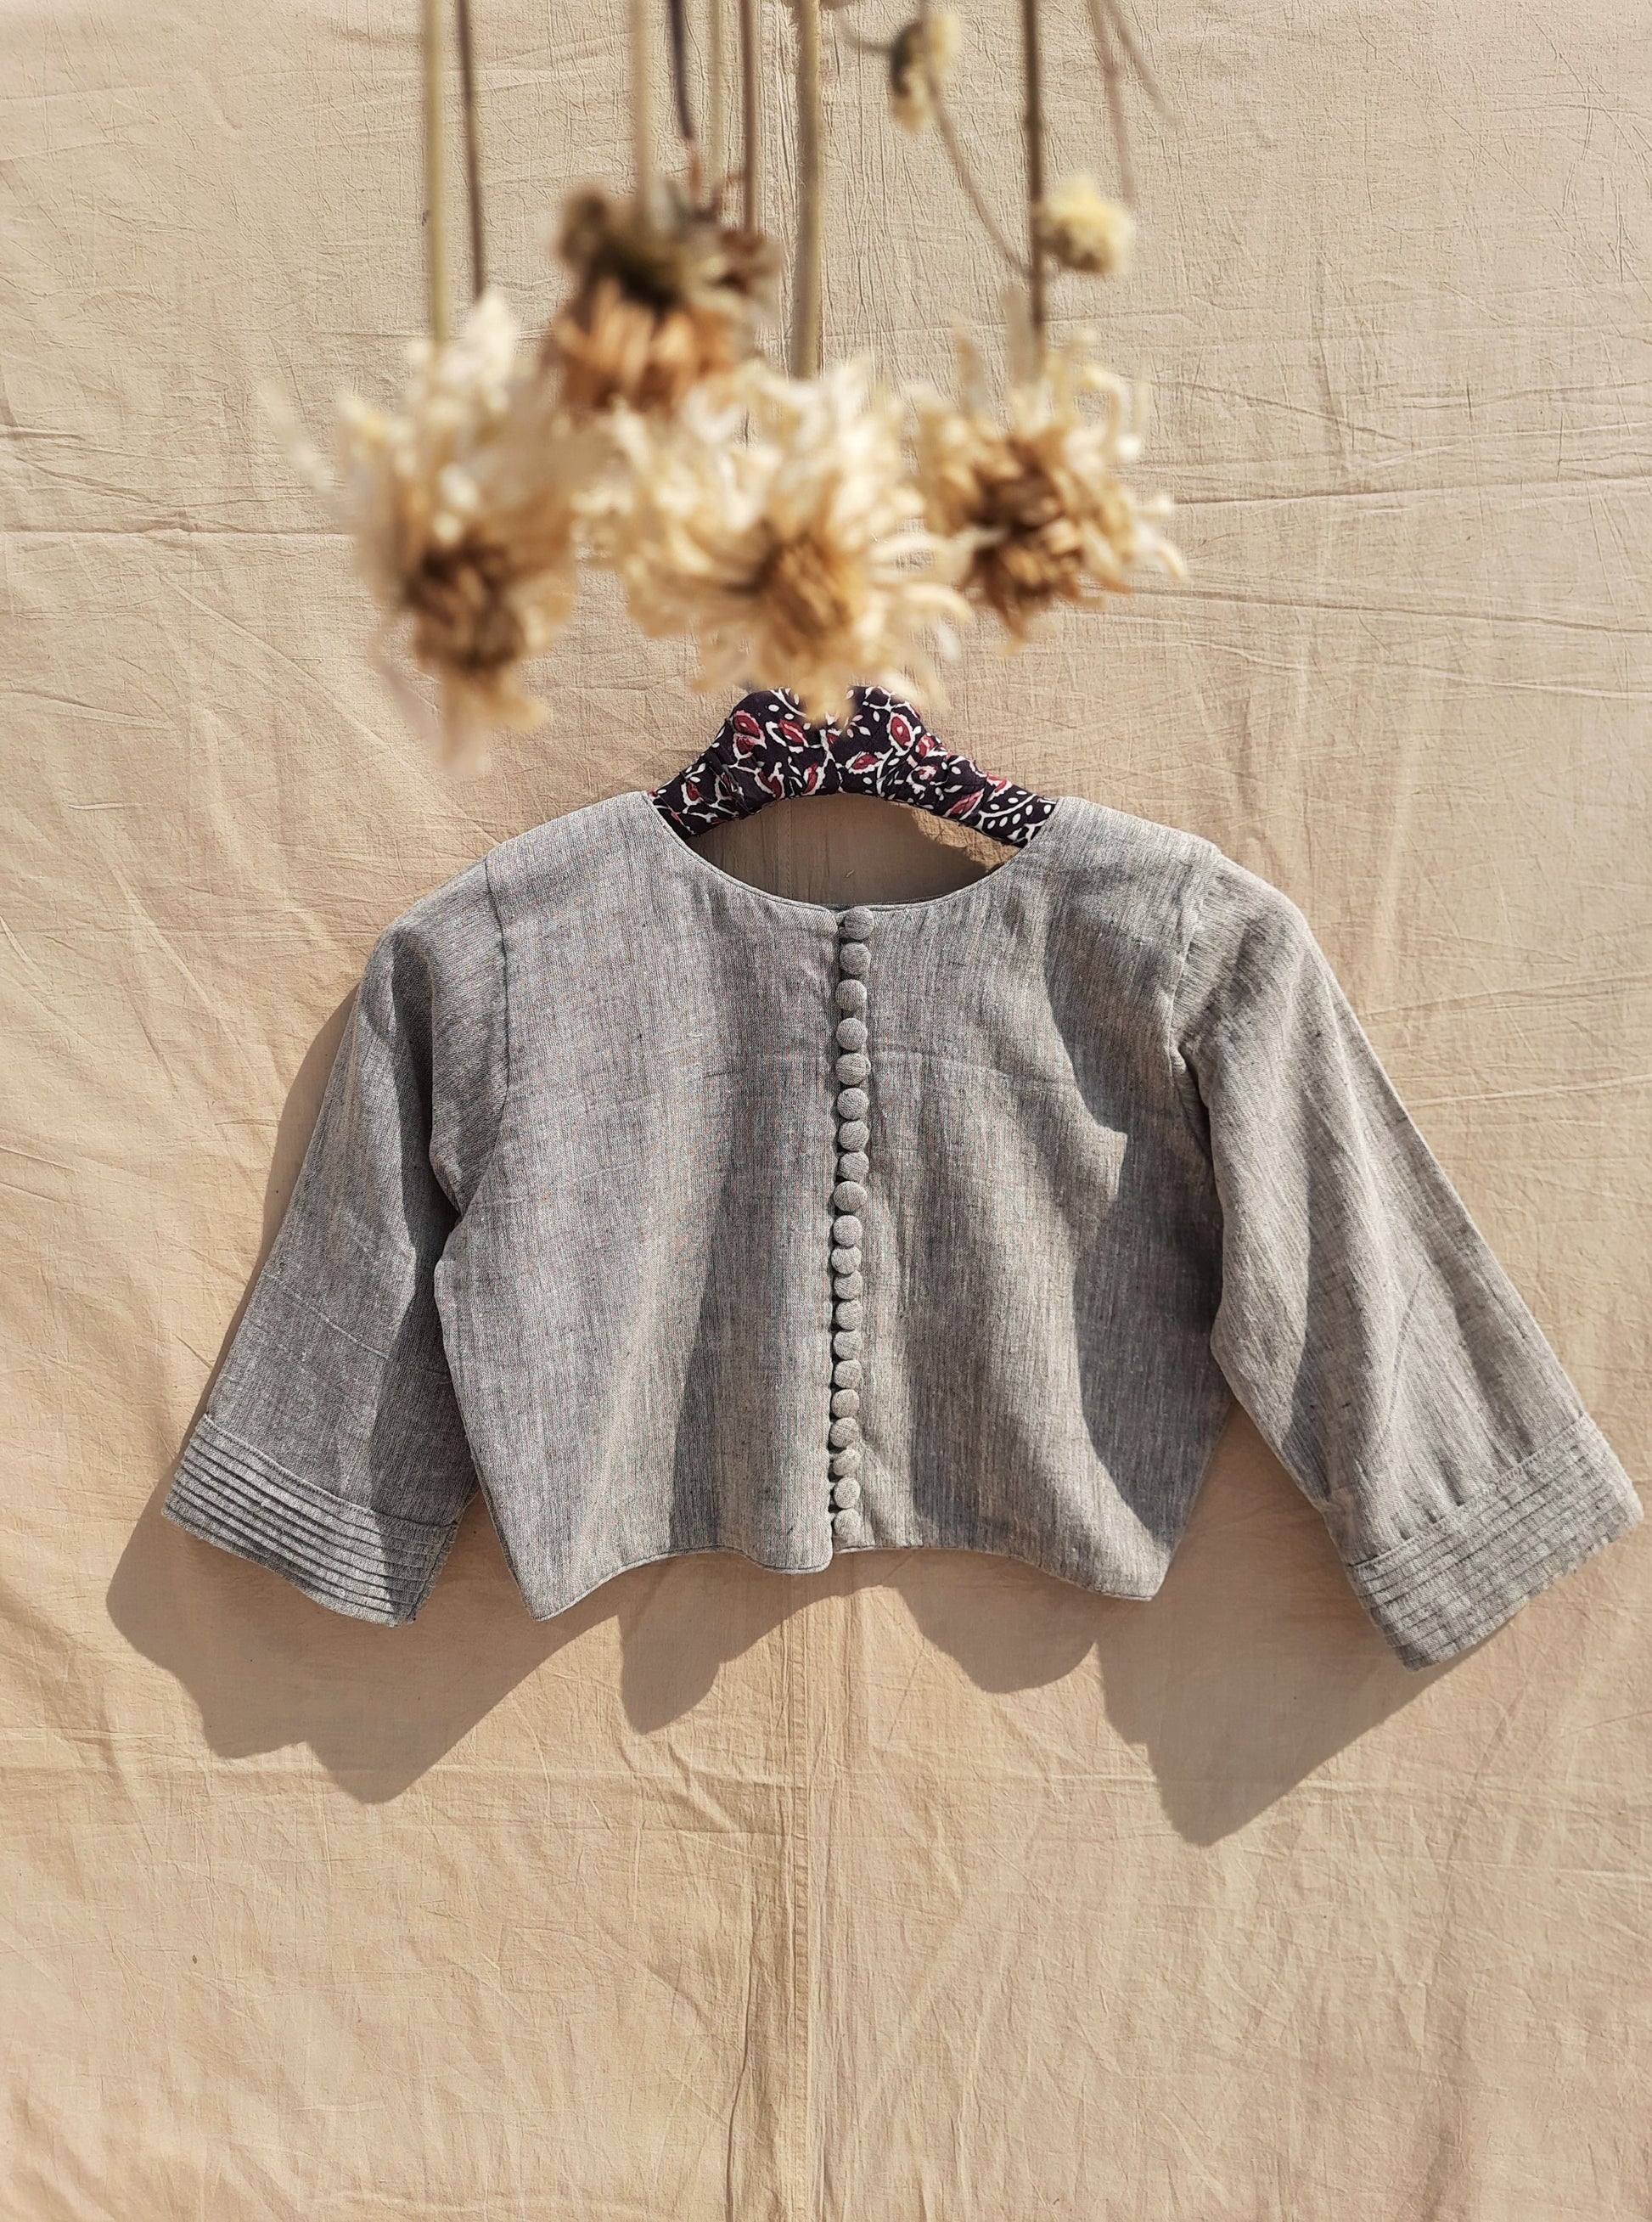 Grey handwoven kala cotton blouse, Ethical fashion